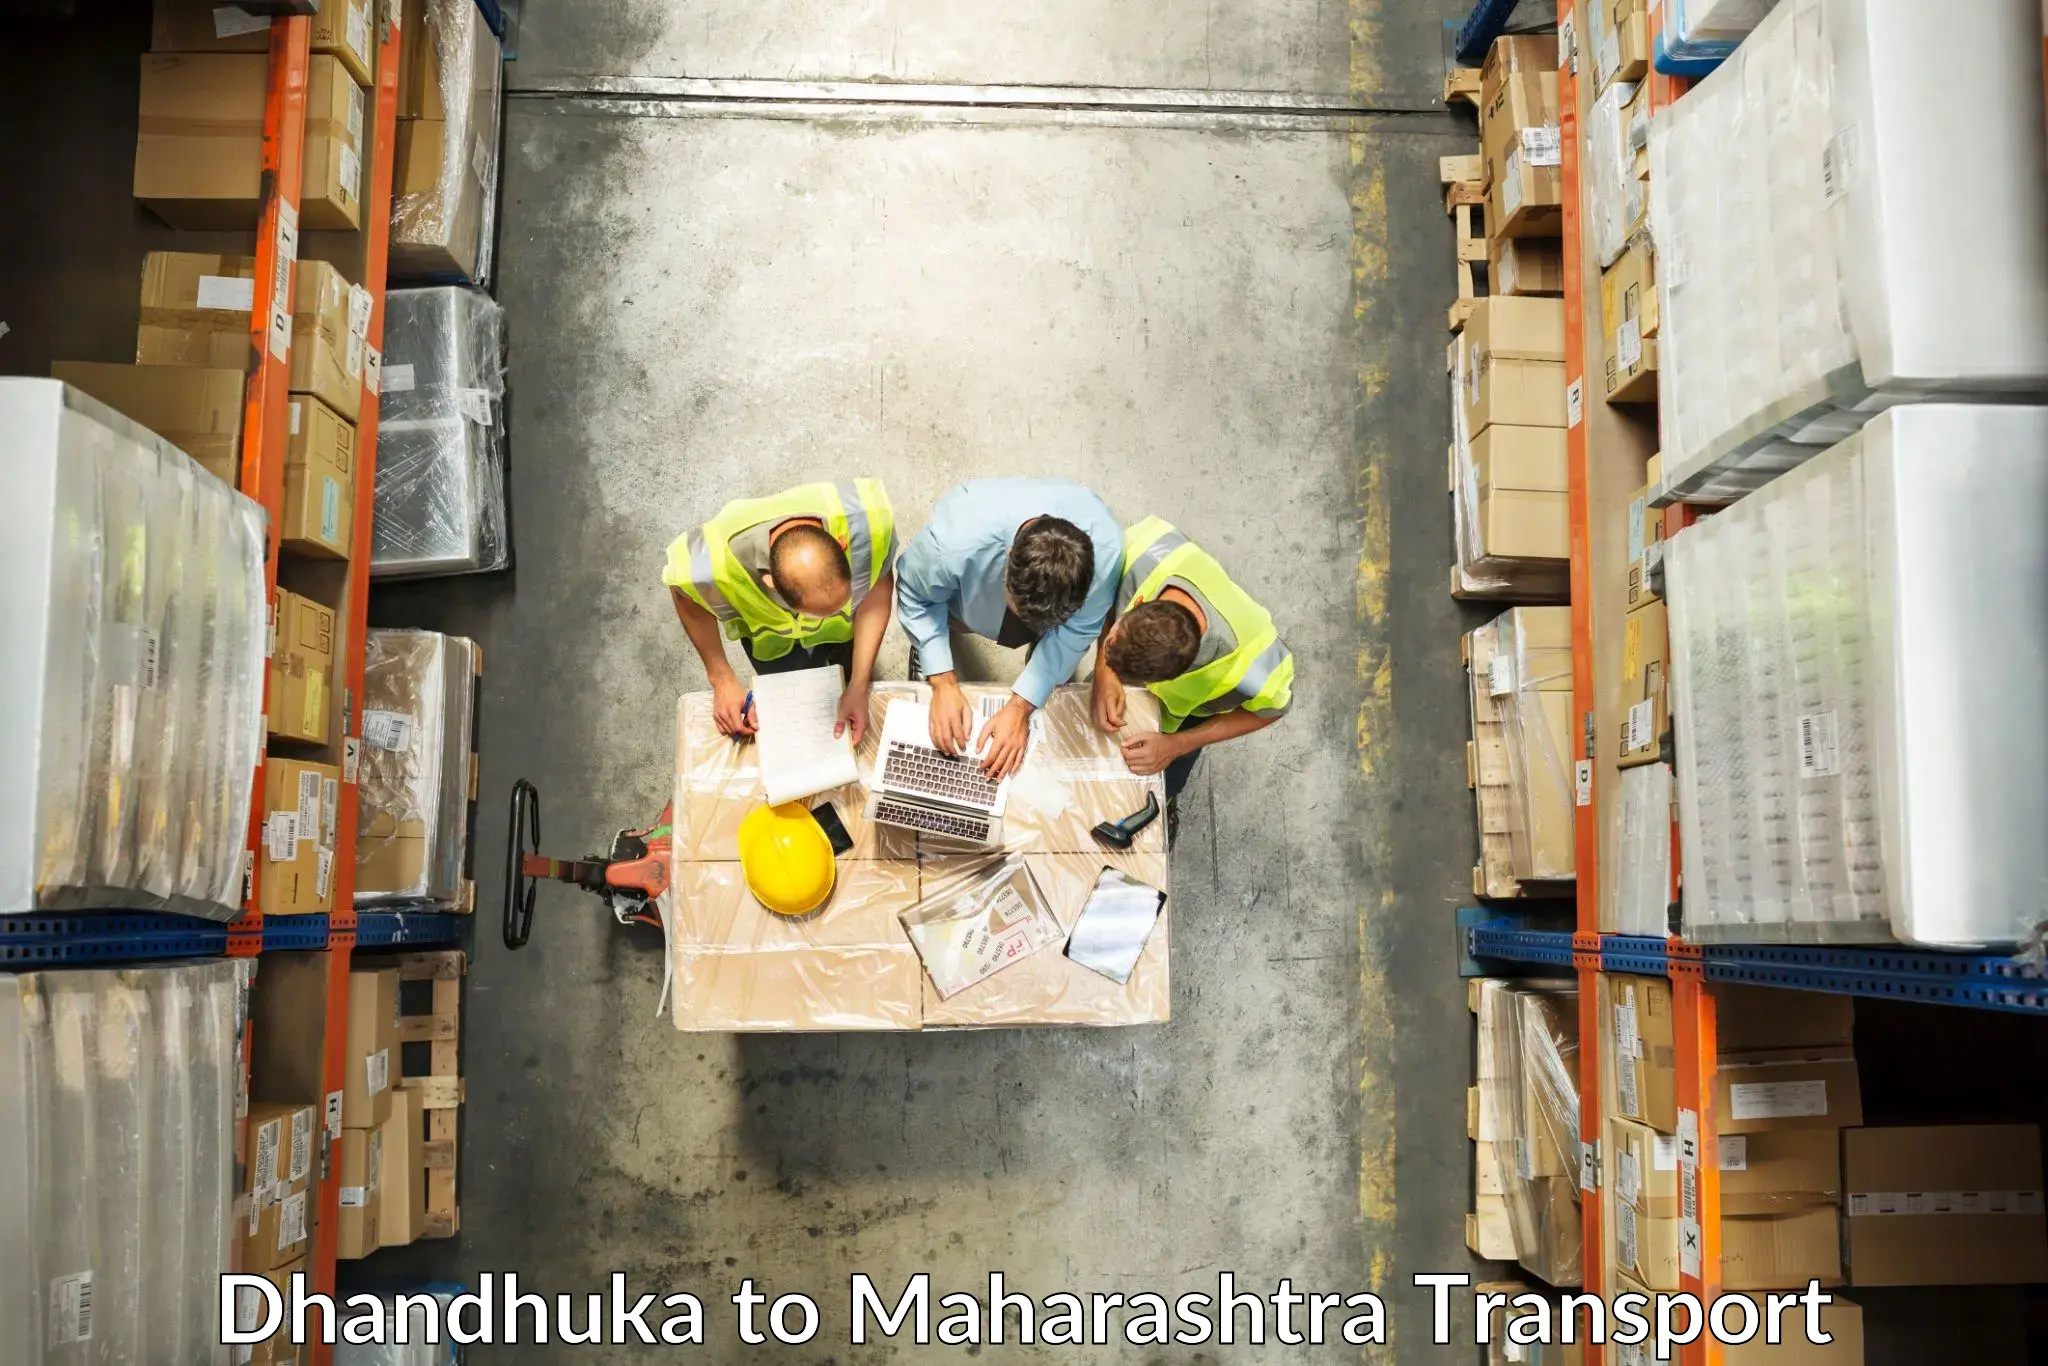 Cycle transportation service Dhandhuka to Navi Mumbai